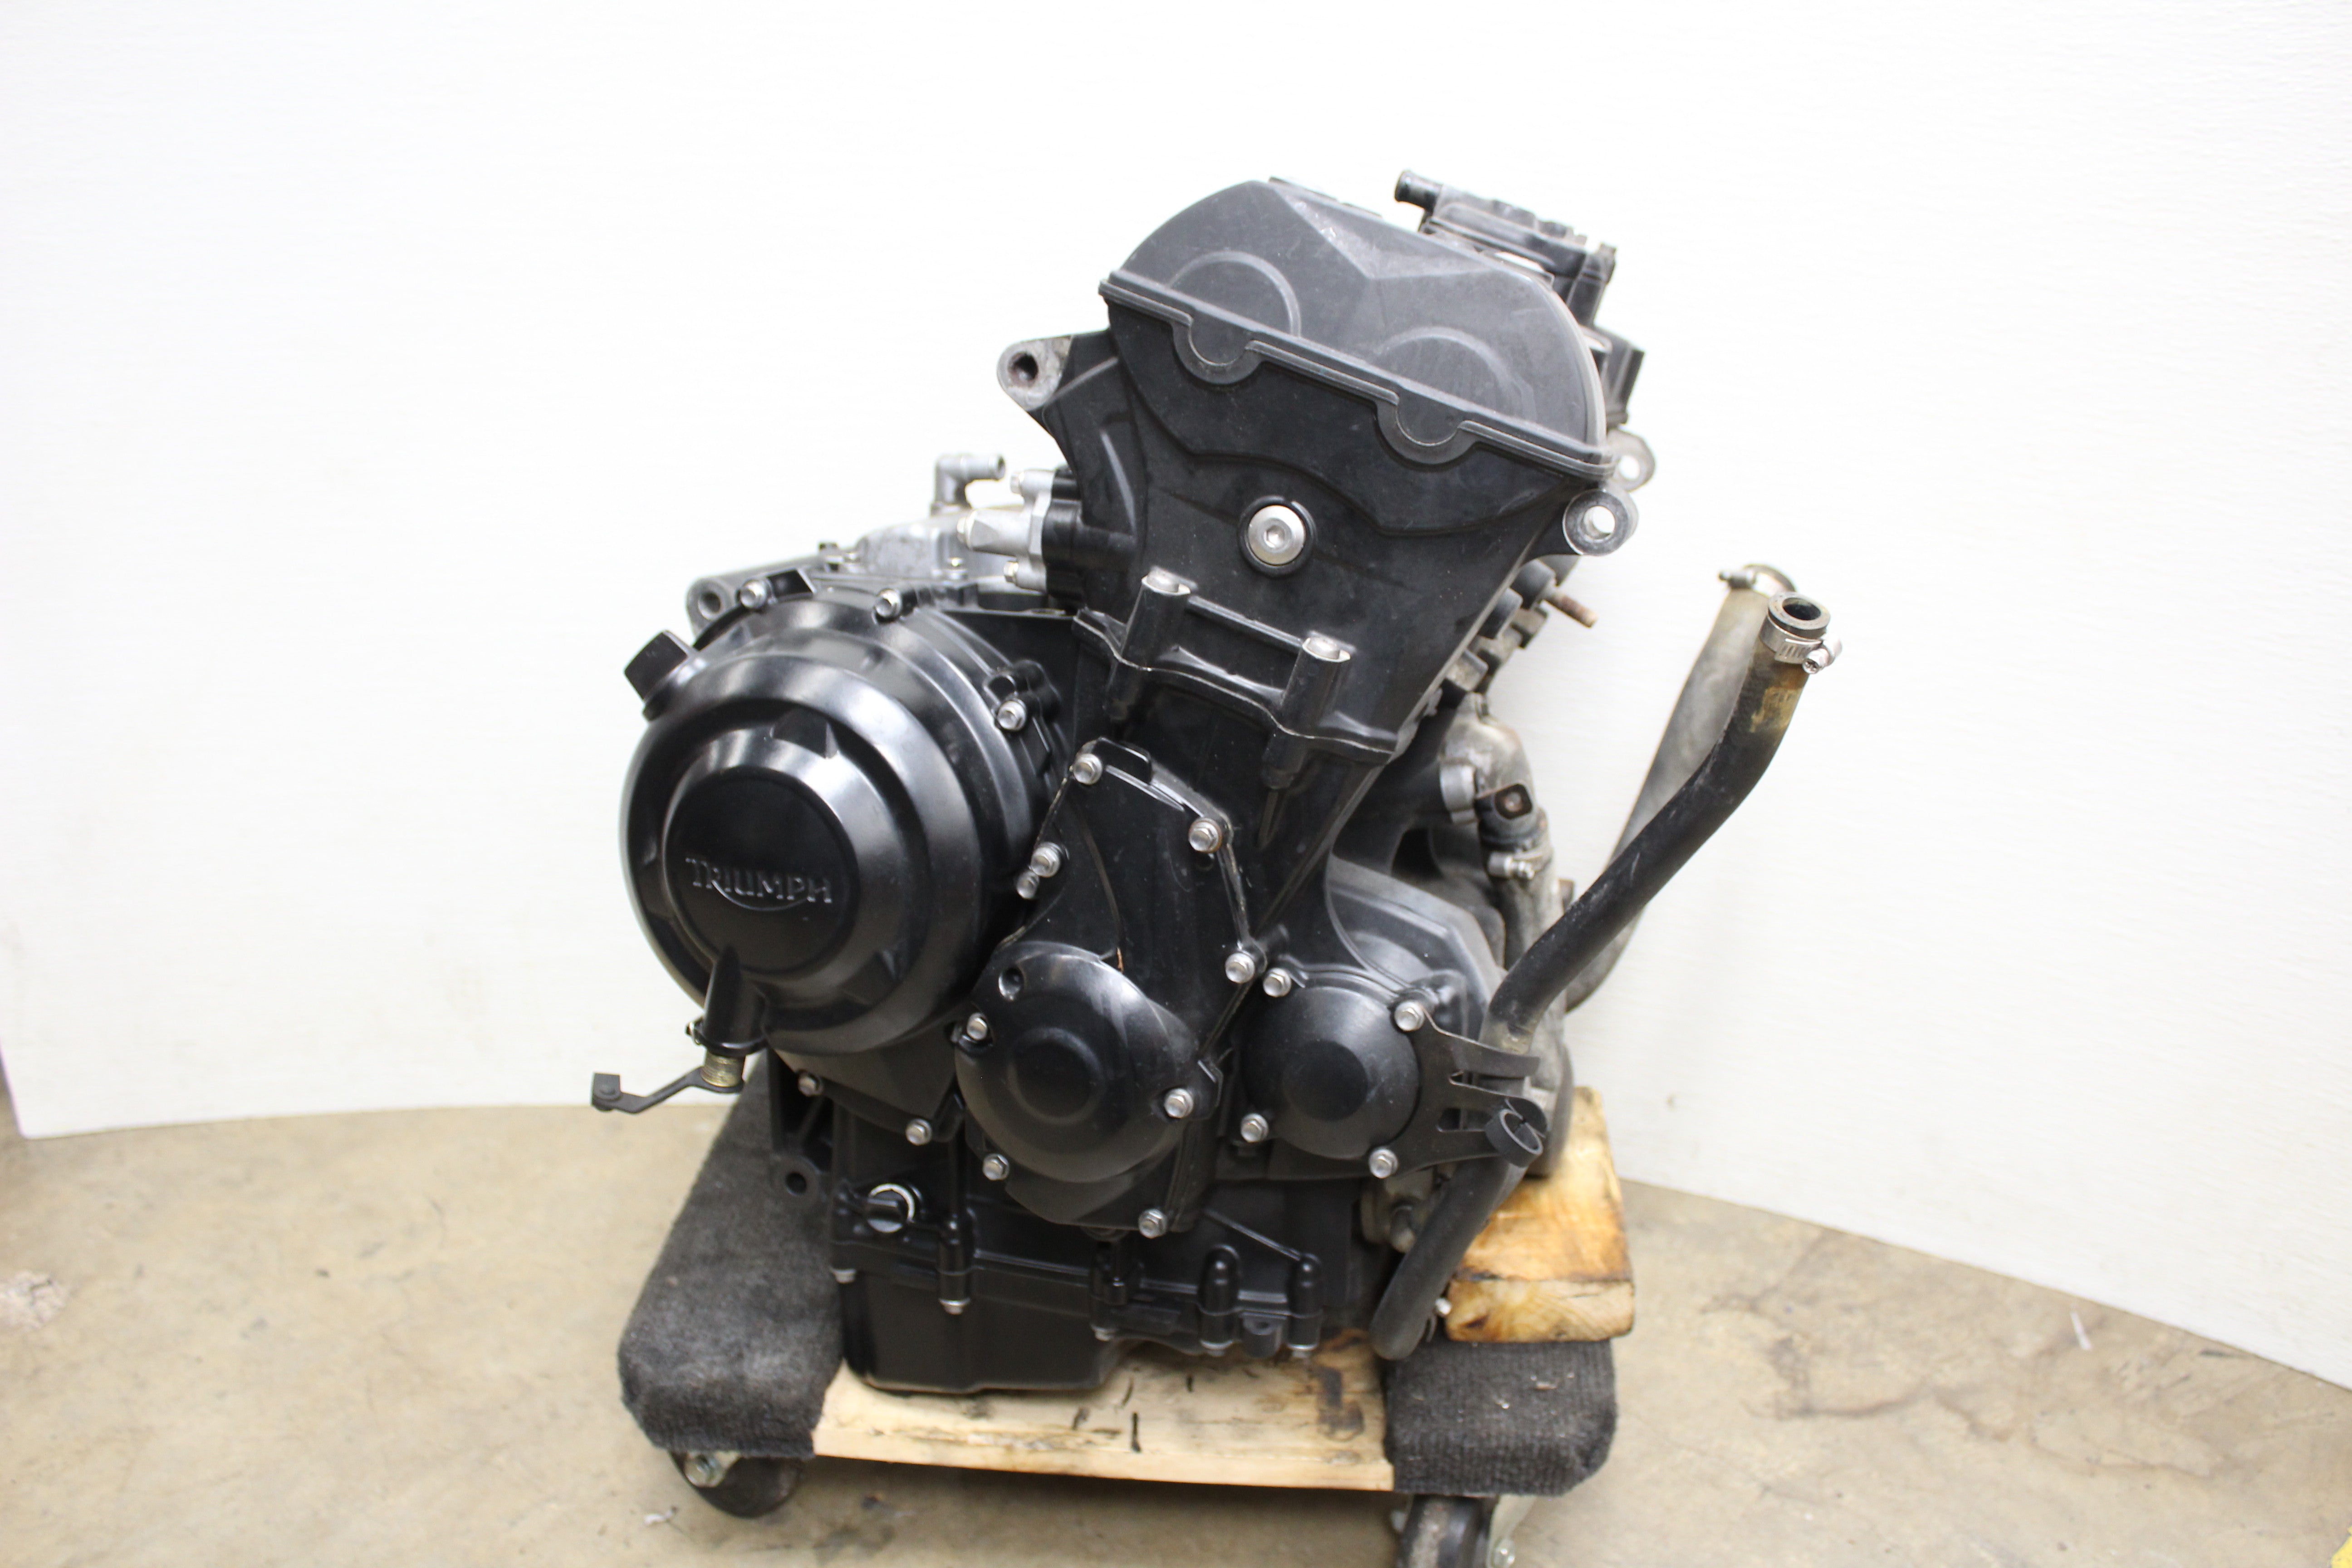 Triumph OEM, Engine Motor Complete Assembly 26,401 Miles Triumph Street Triple R 09-17 OEM 675